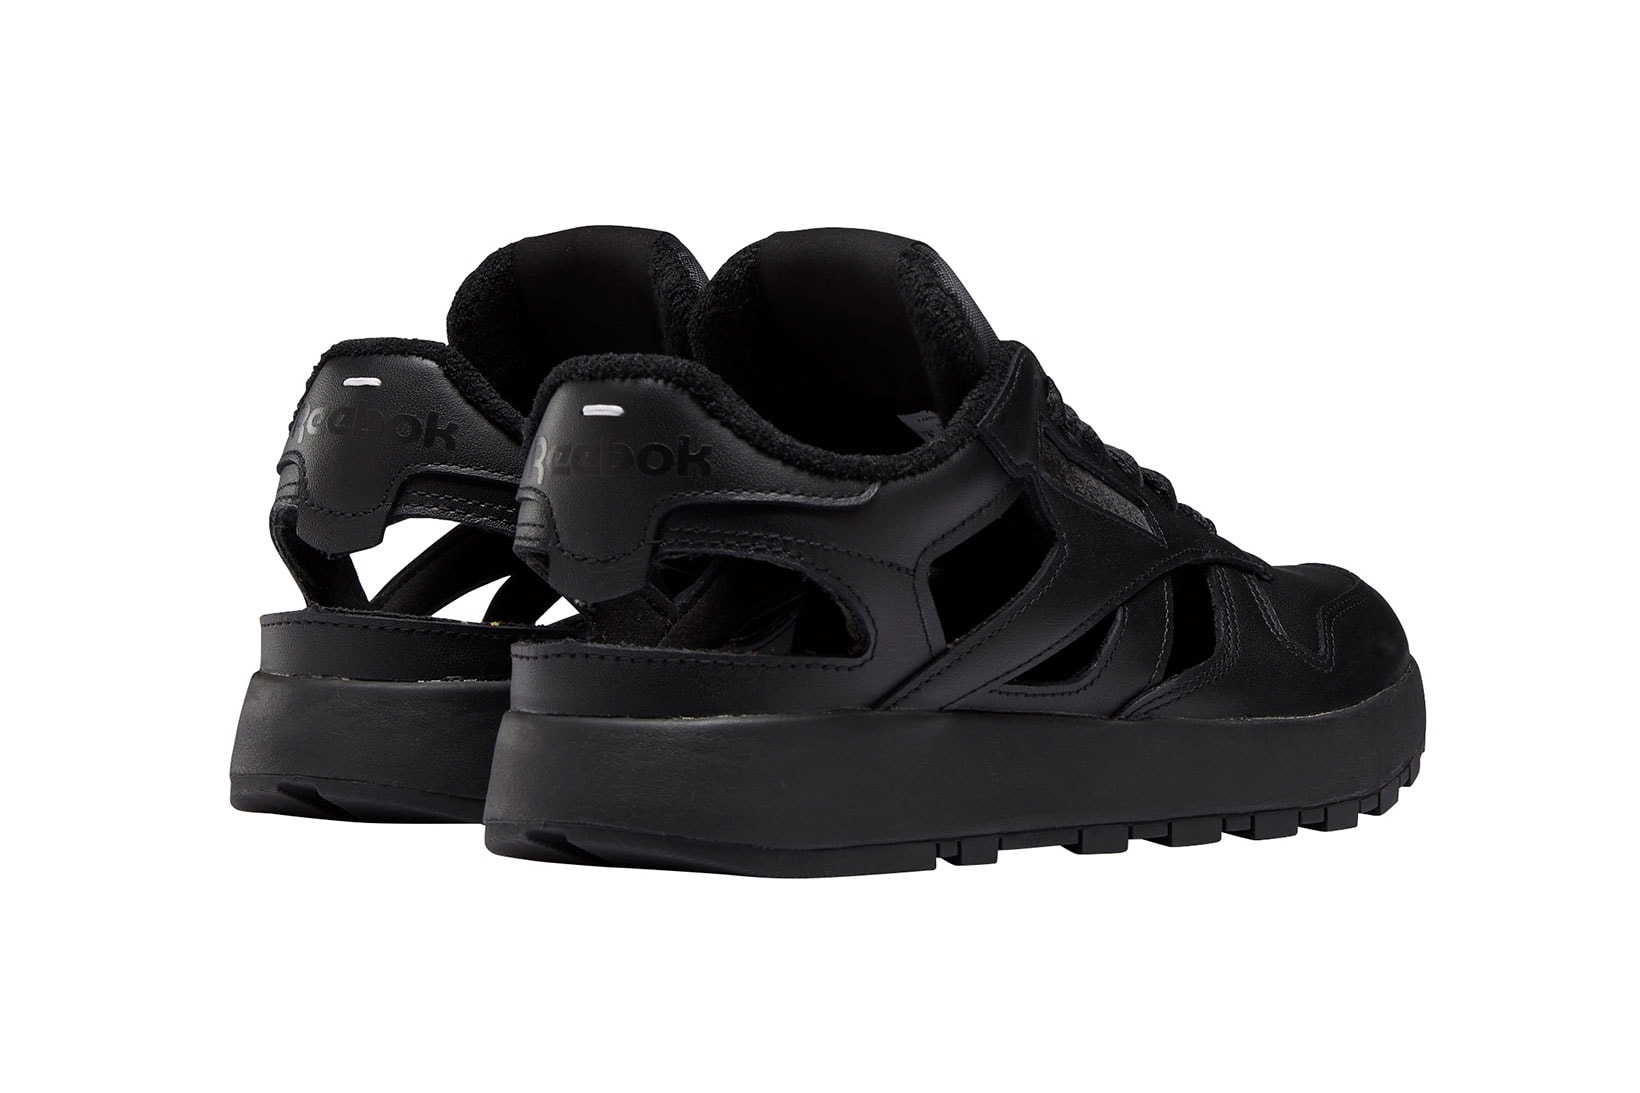 Maison Margiela Reebok Classic Leather Tabi Décortiqué Low Sneakers Footwear Collaboration 